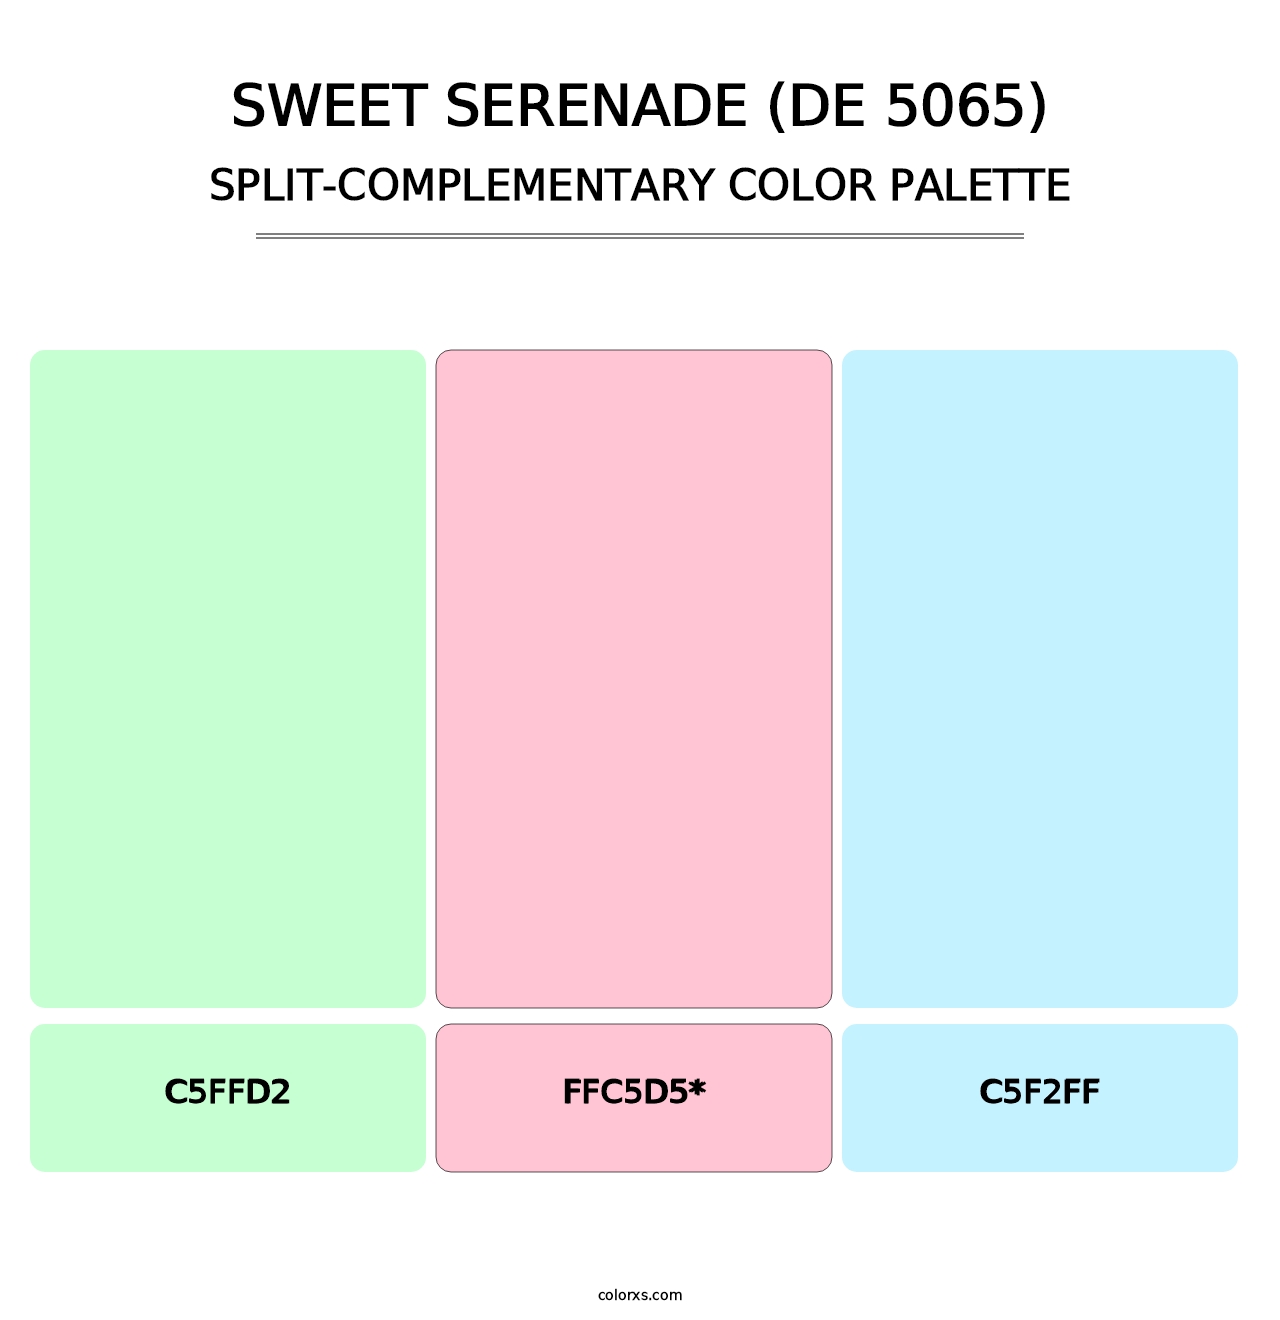 Sweet Serenade (DE 5065) - Split-Complementary Color Palette